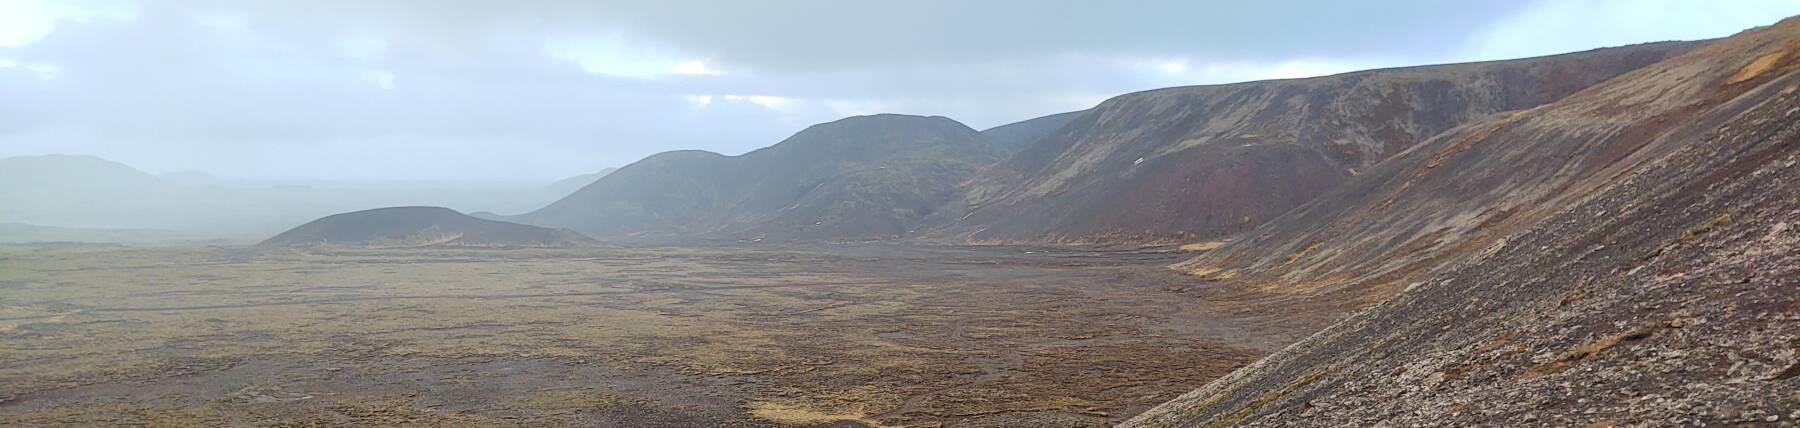 Terrain near Fagradalsfjall volcano in southwestern Iceland.